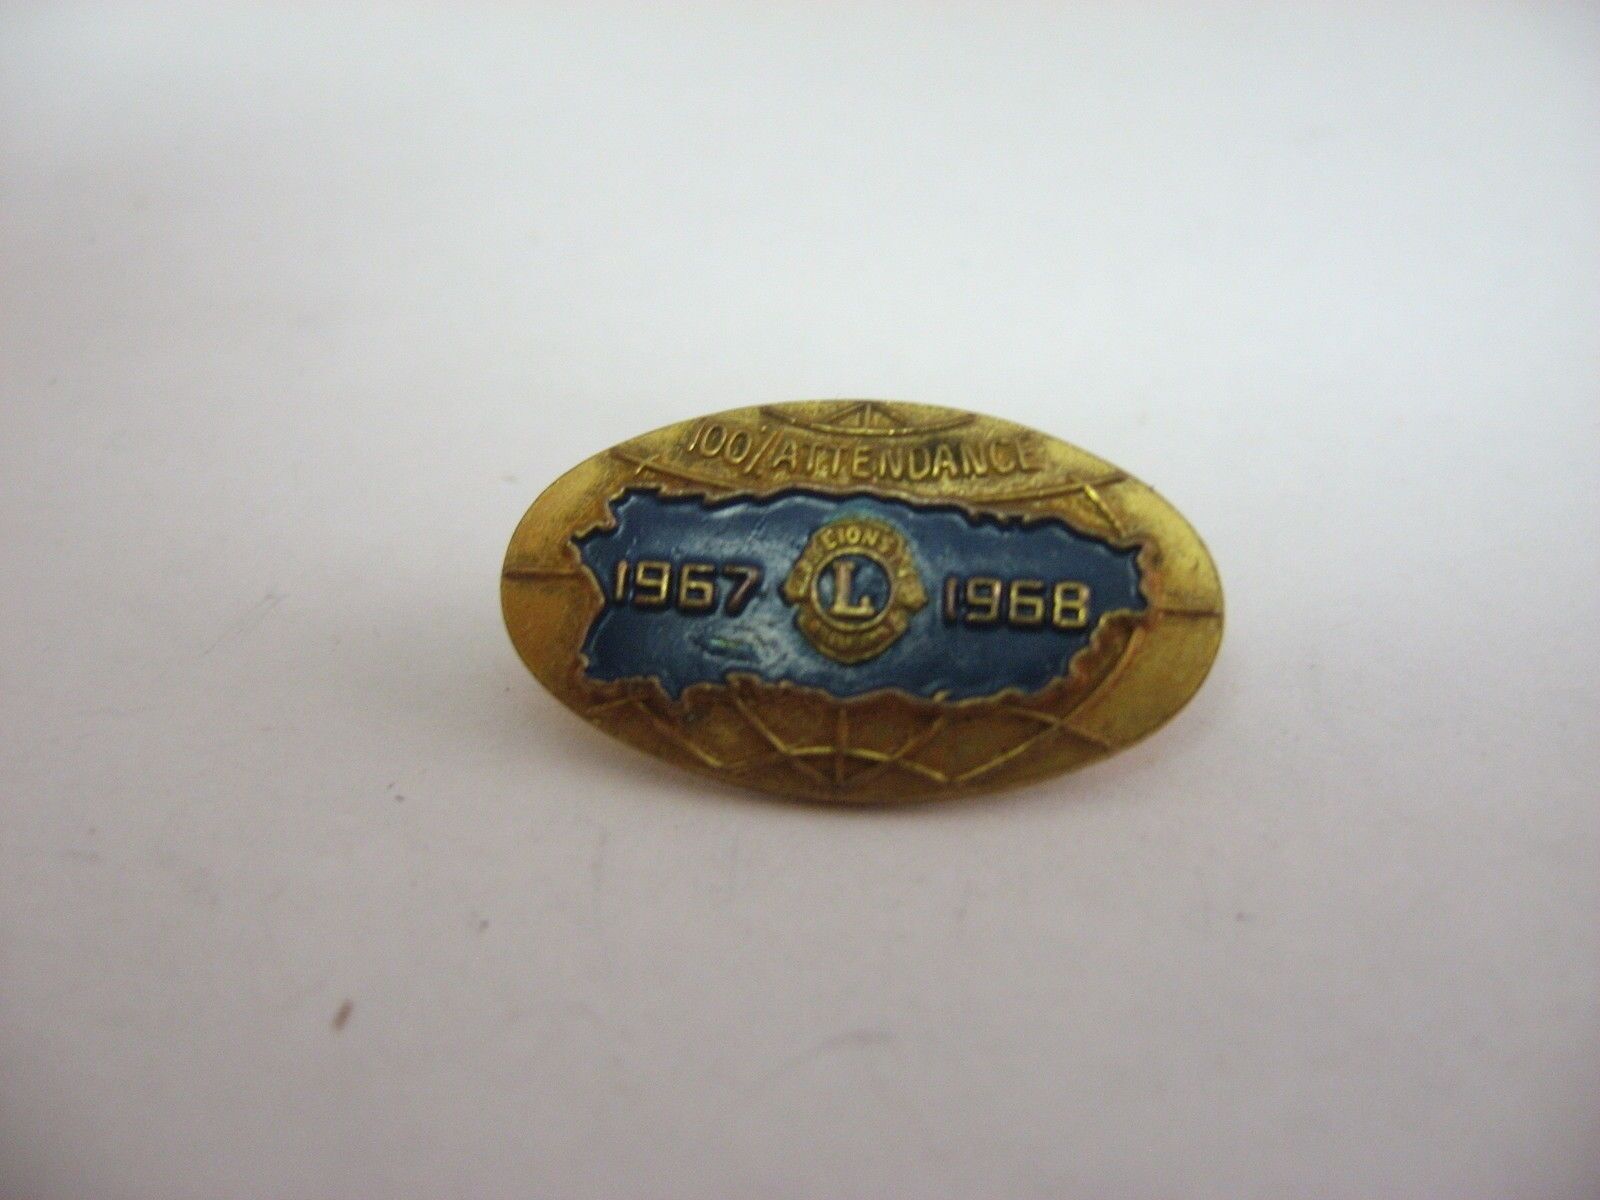 Vintage Lapel Hat Pin: 1968 Lions International 100% Attendance